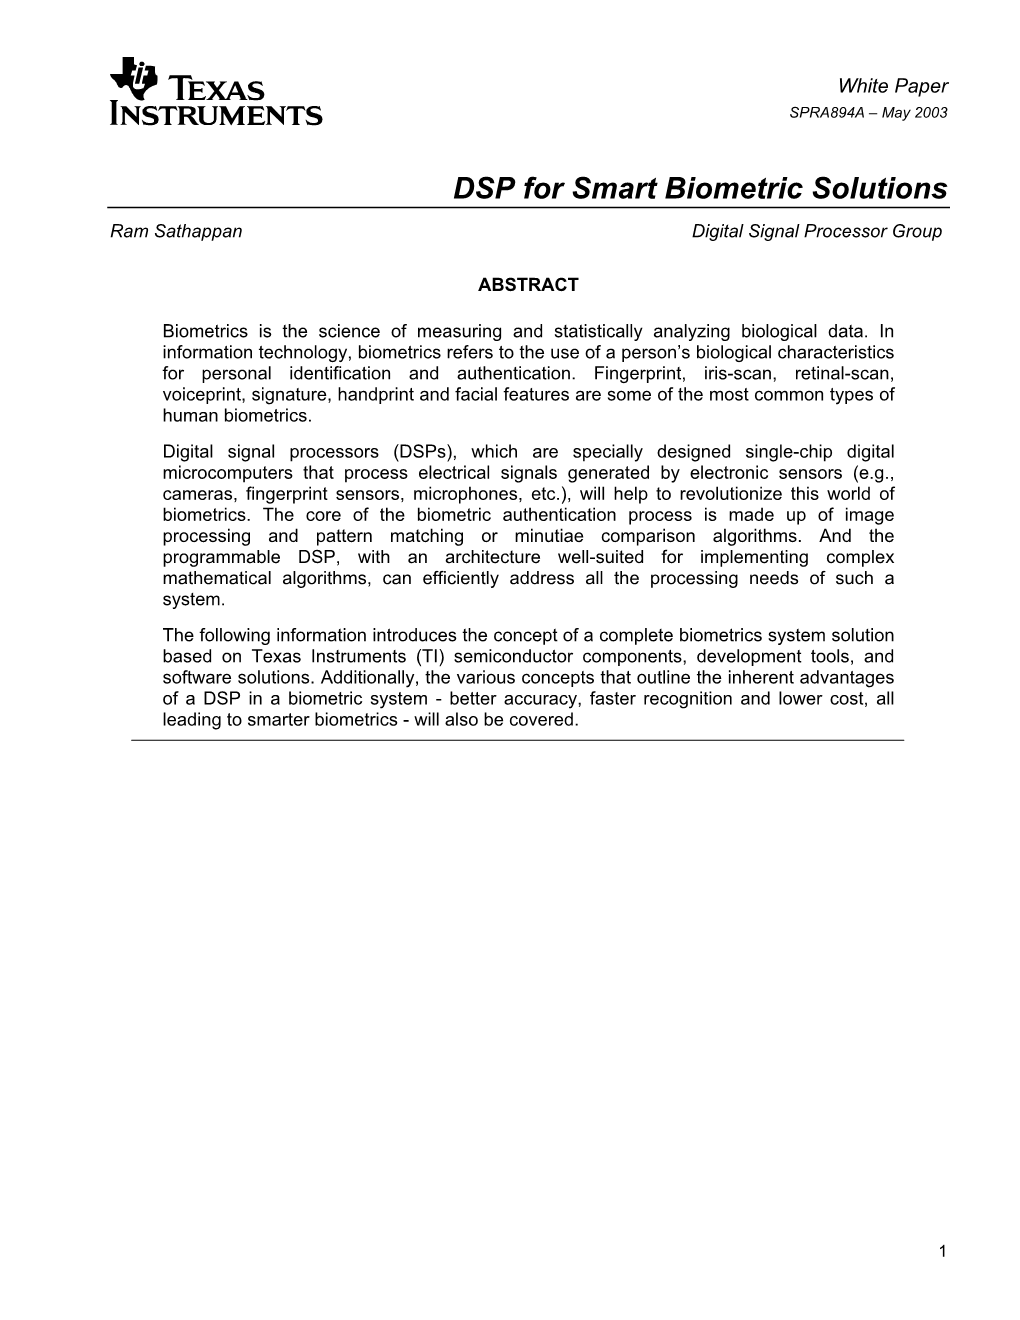 DSP for Smart Biometric Solutions Ram Sathappan Digital Signal Processor Group